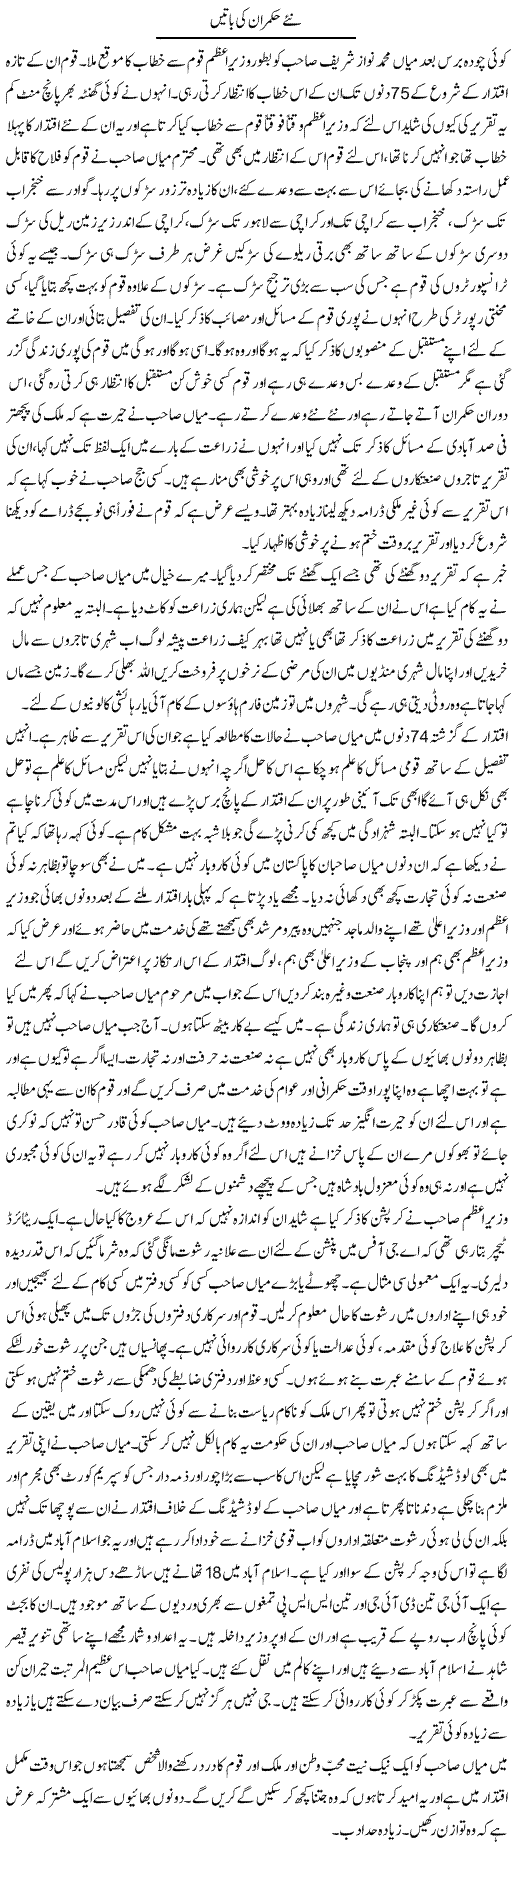 Nay Hakumran Ki Batain | Abdul Qadir Hassan | Daily Urdu Columns